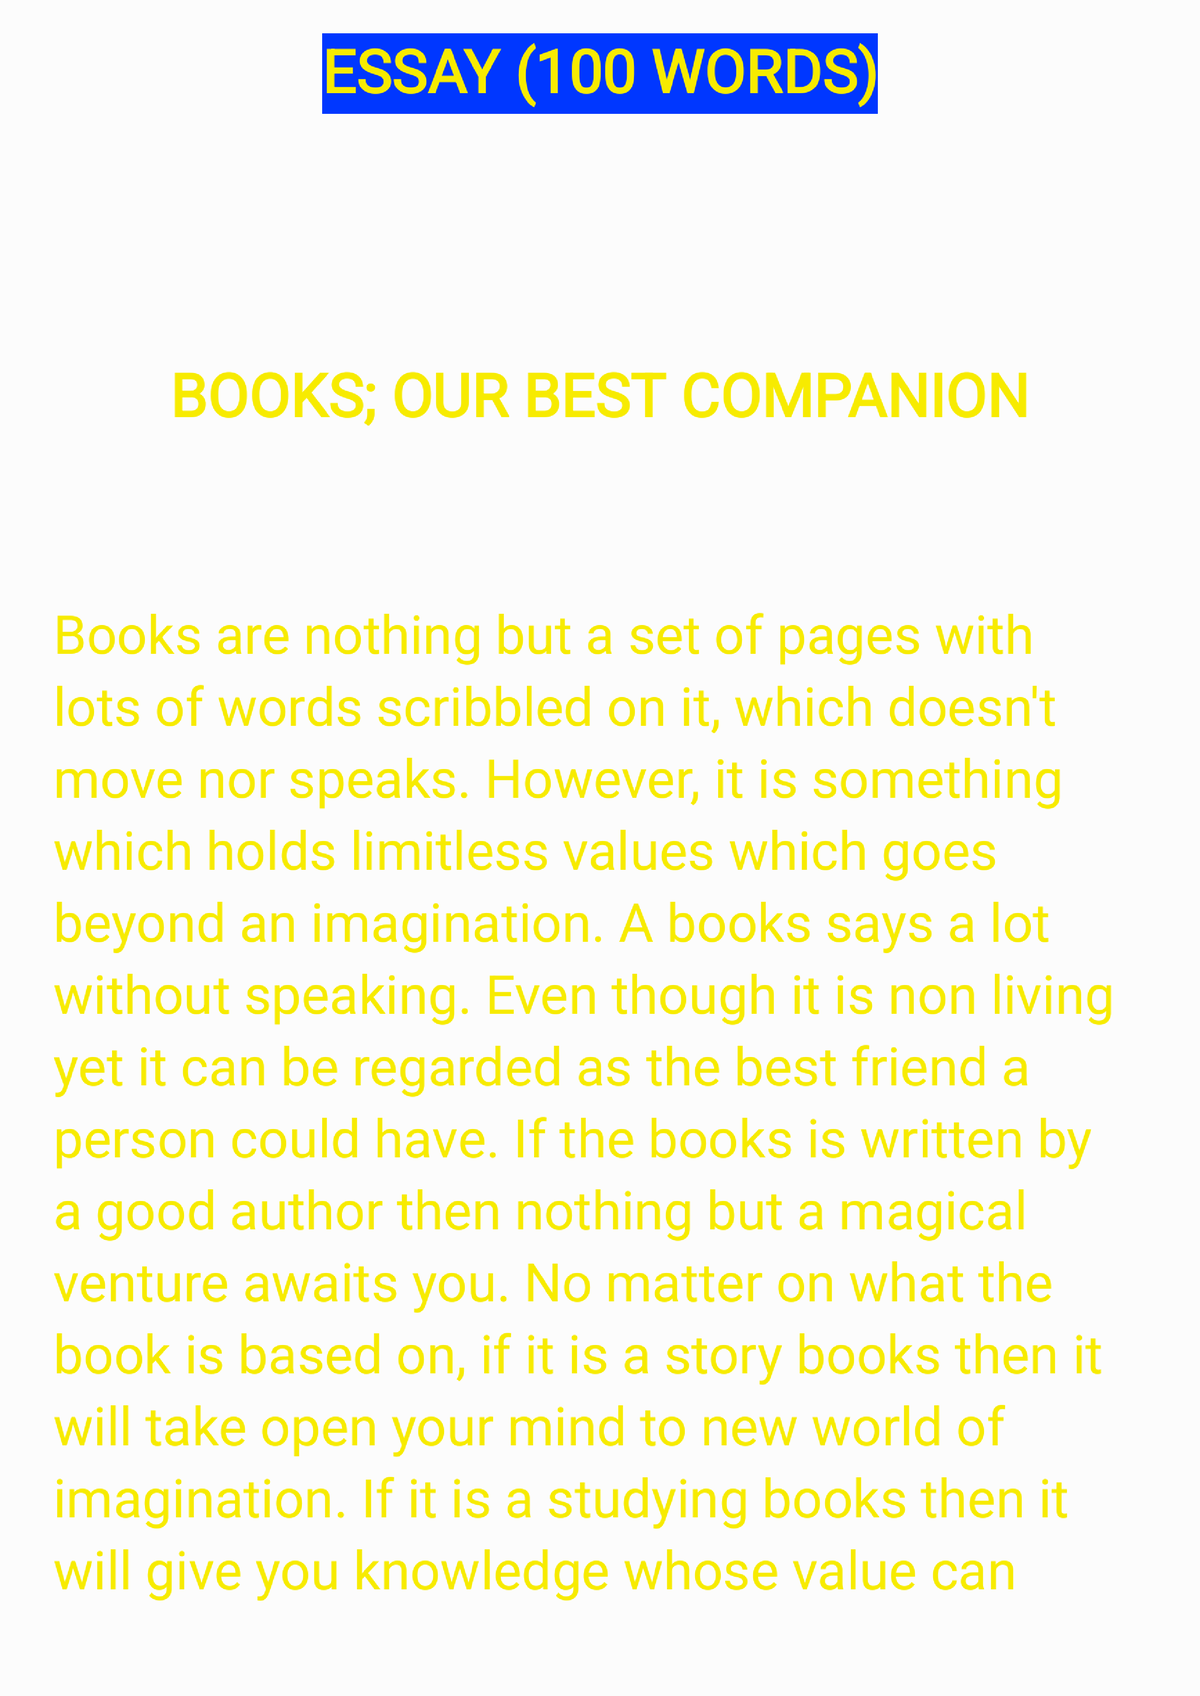 books are the best companion essay